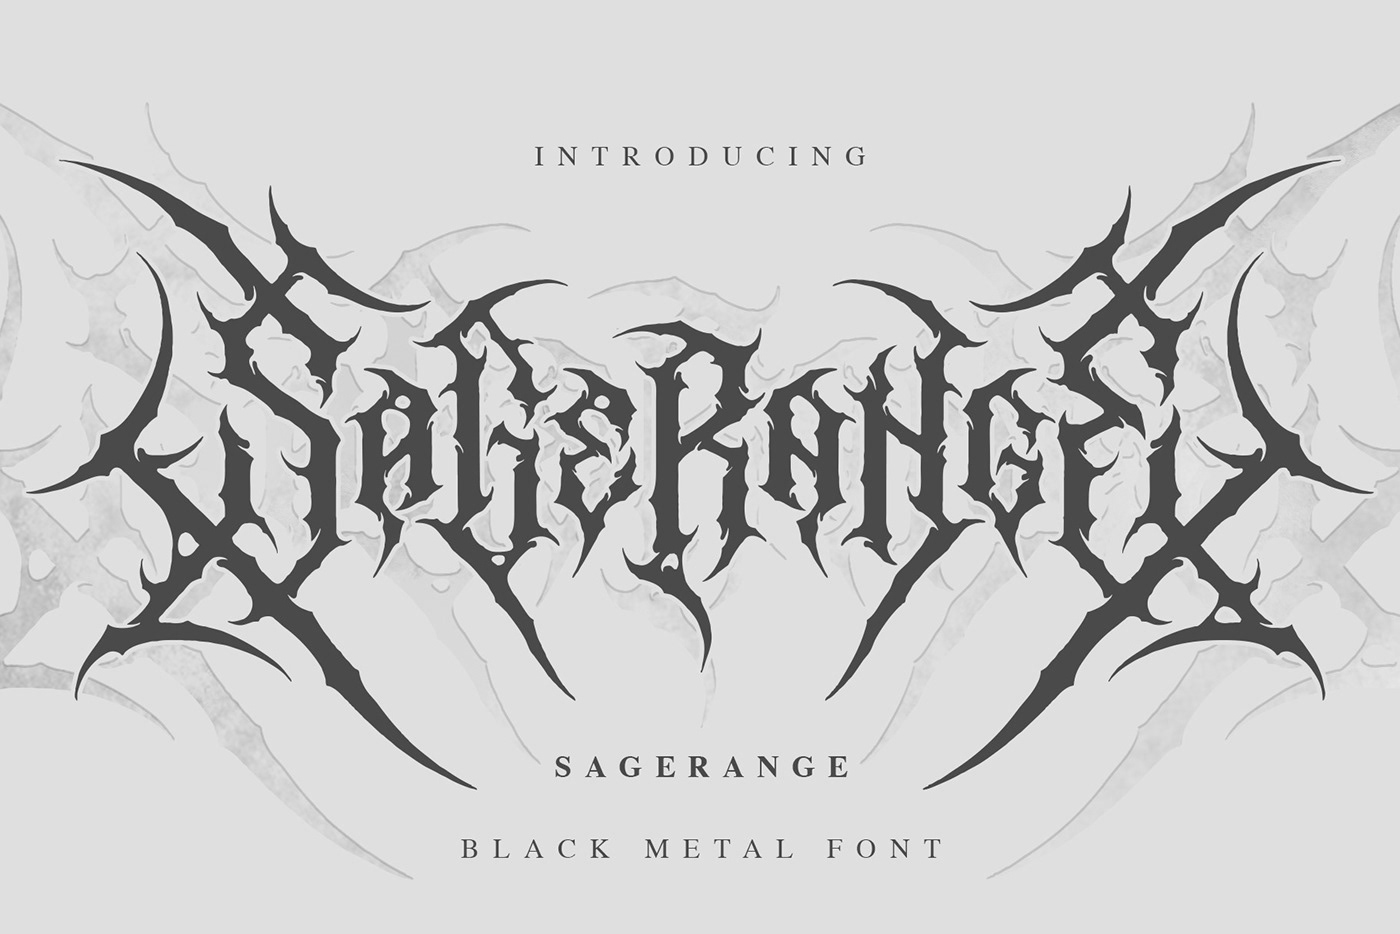 black metal black metal font black metal logo Blackmetal death metal death metal font death metal logo deathcore Deathmetal